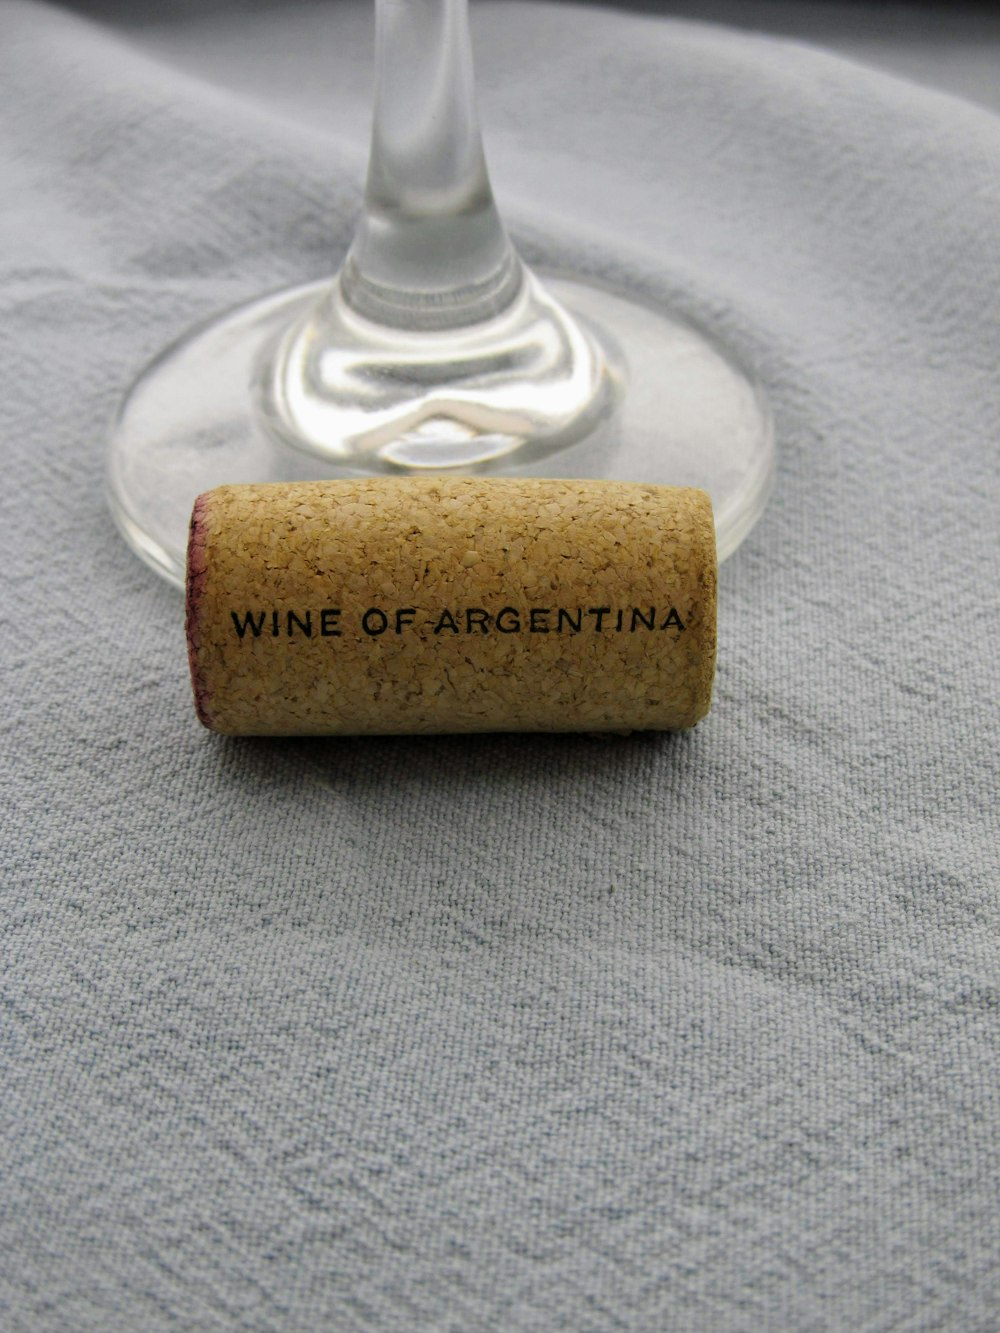 brown wine cork beside clear wine glass